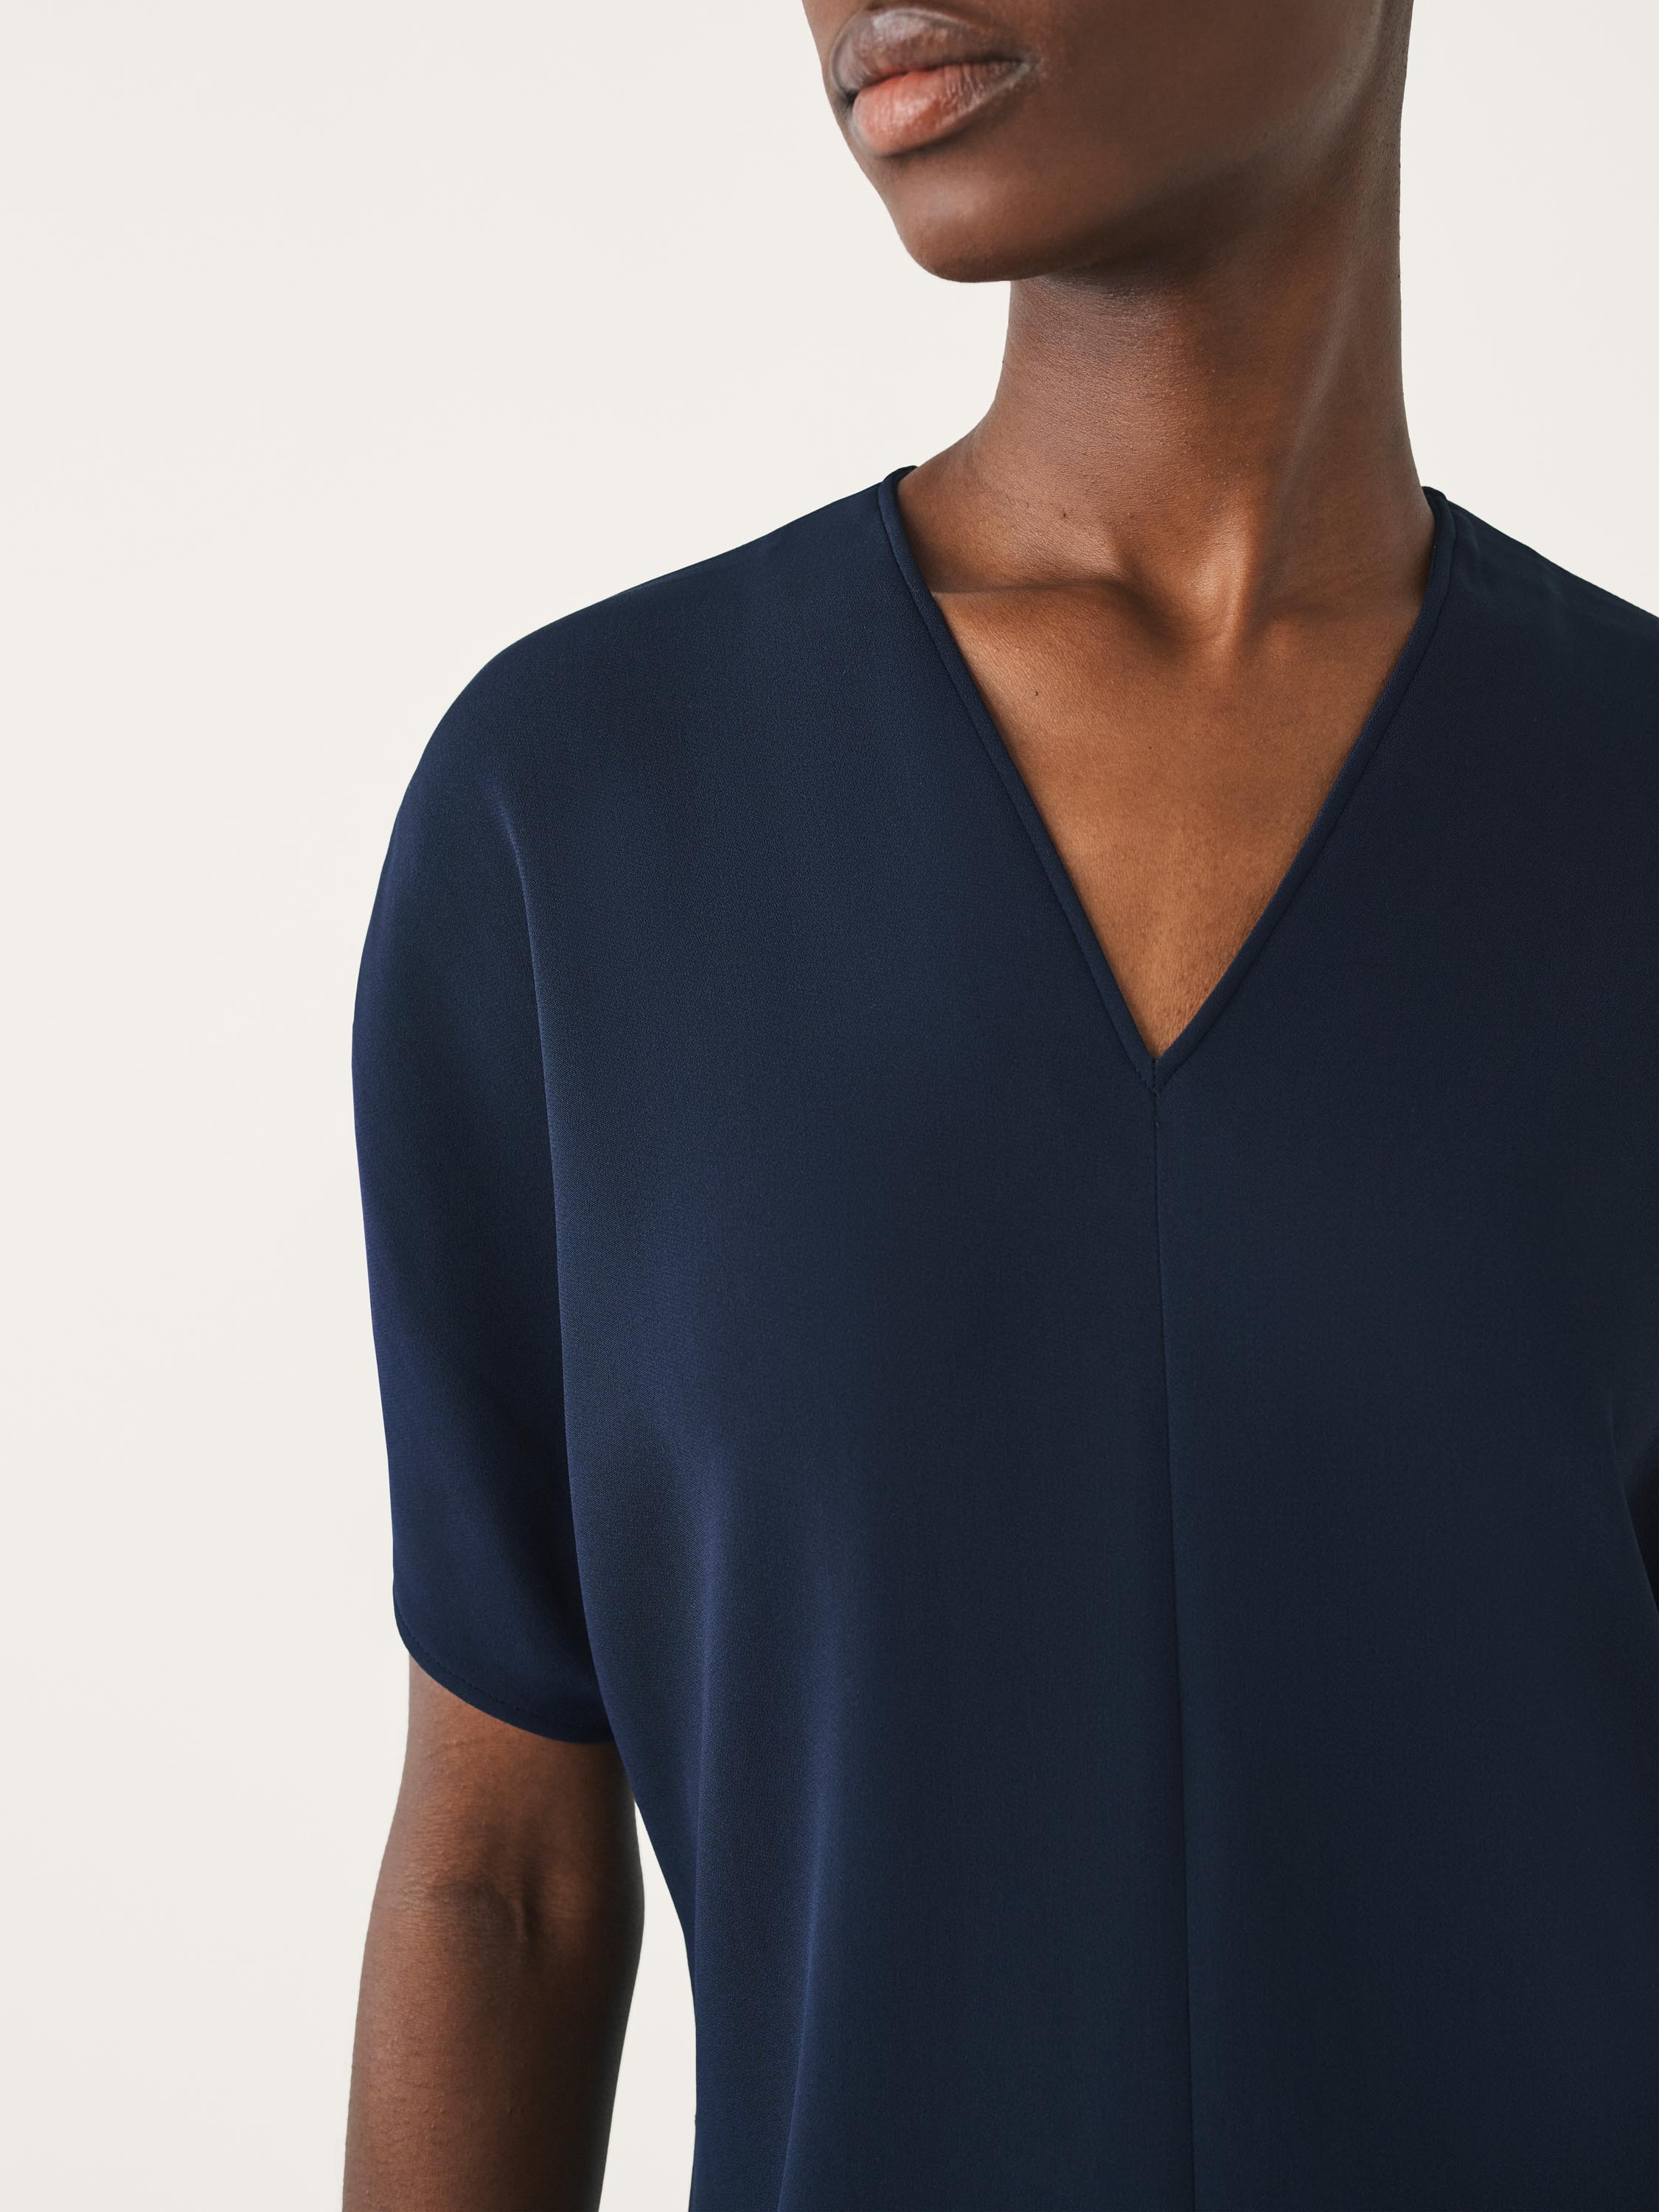 CHENOA v-neck tunic dress w/ cap sleeves & side slits